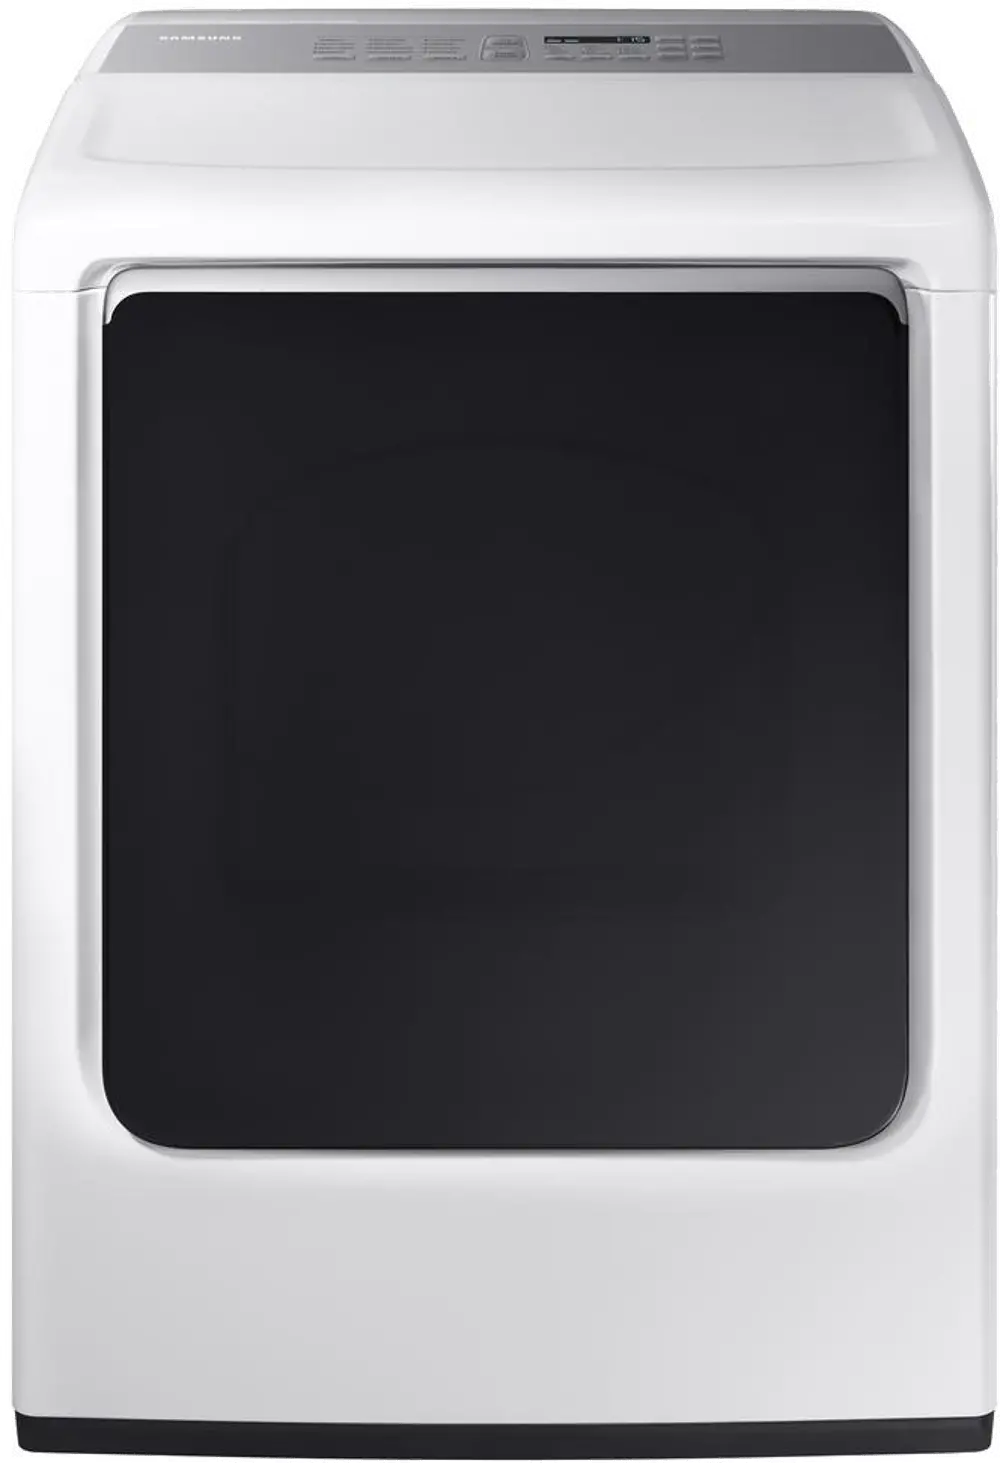 DVG52M8650W Samsung Gas Dryer with Multi-Steam Technology - 7.4 cu. ft. White-1